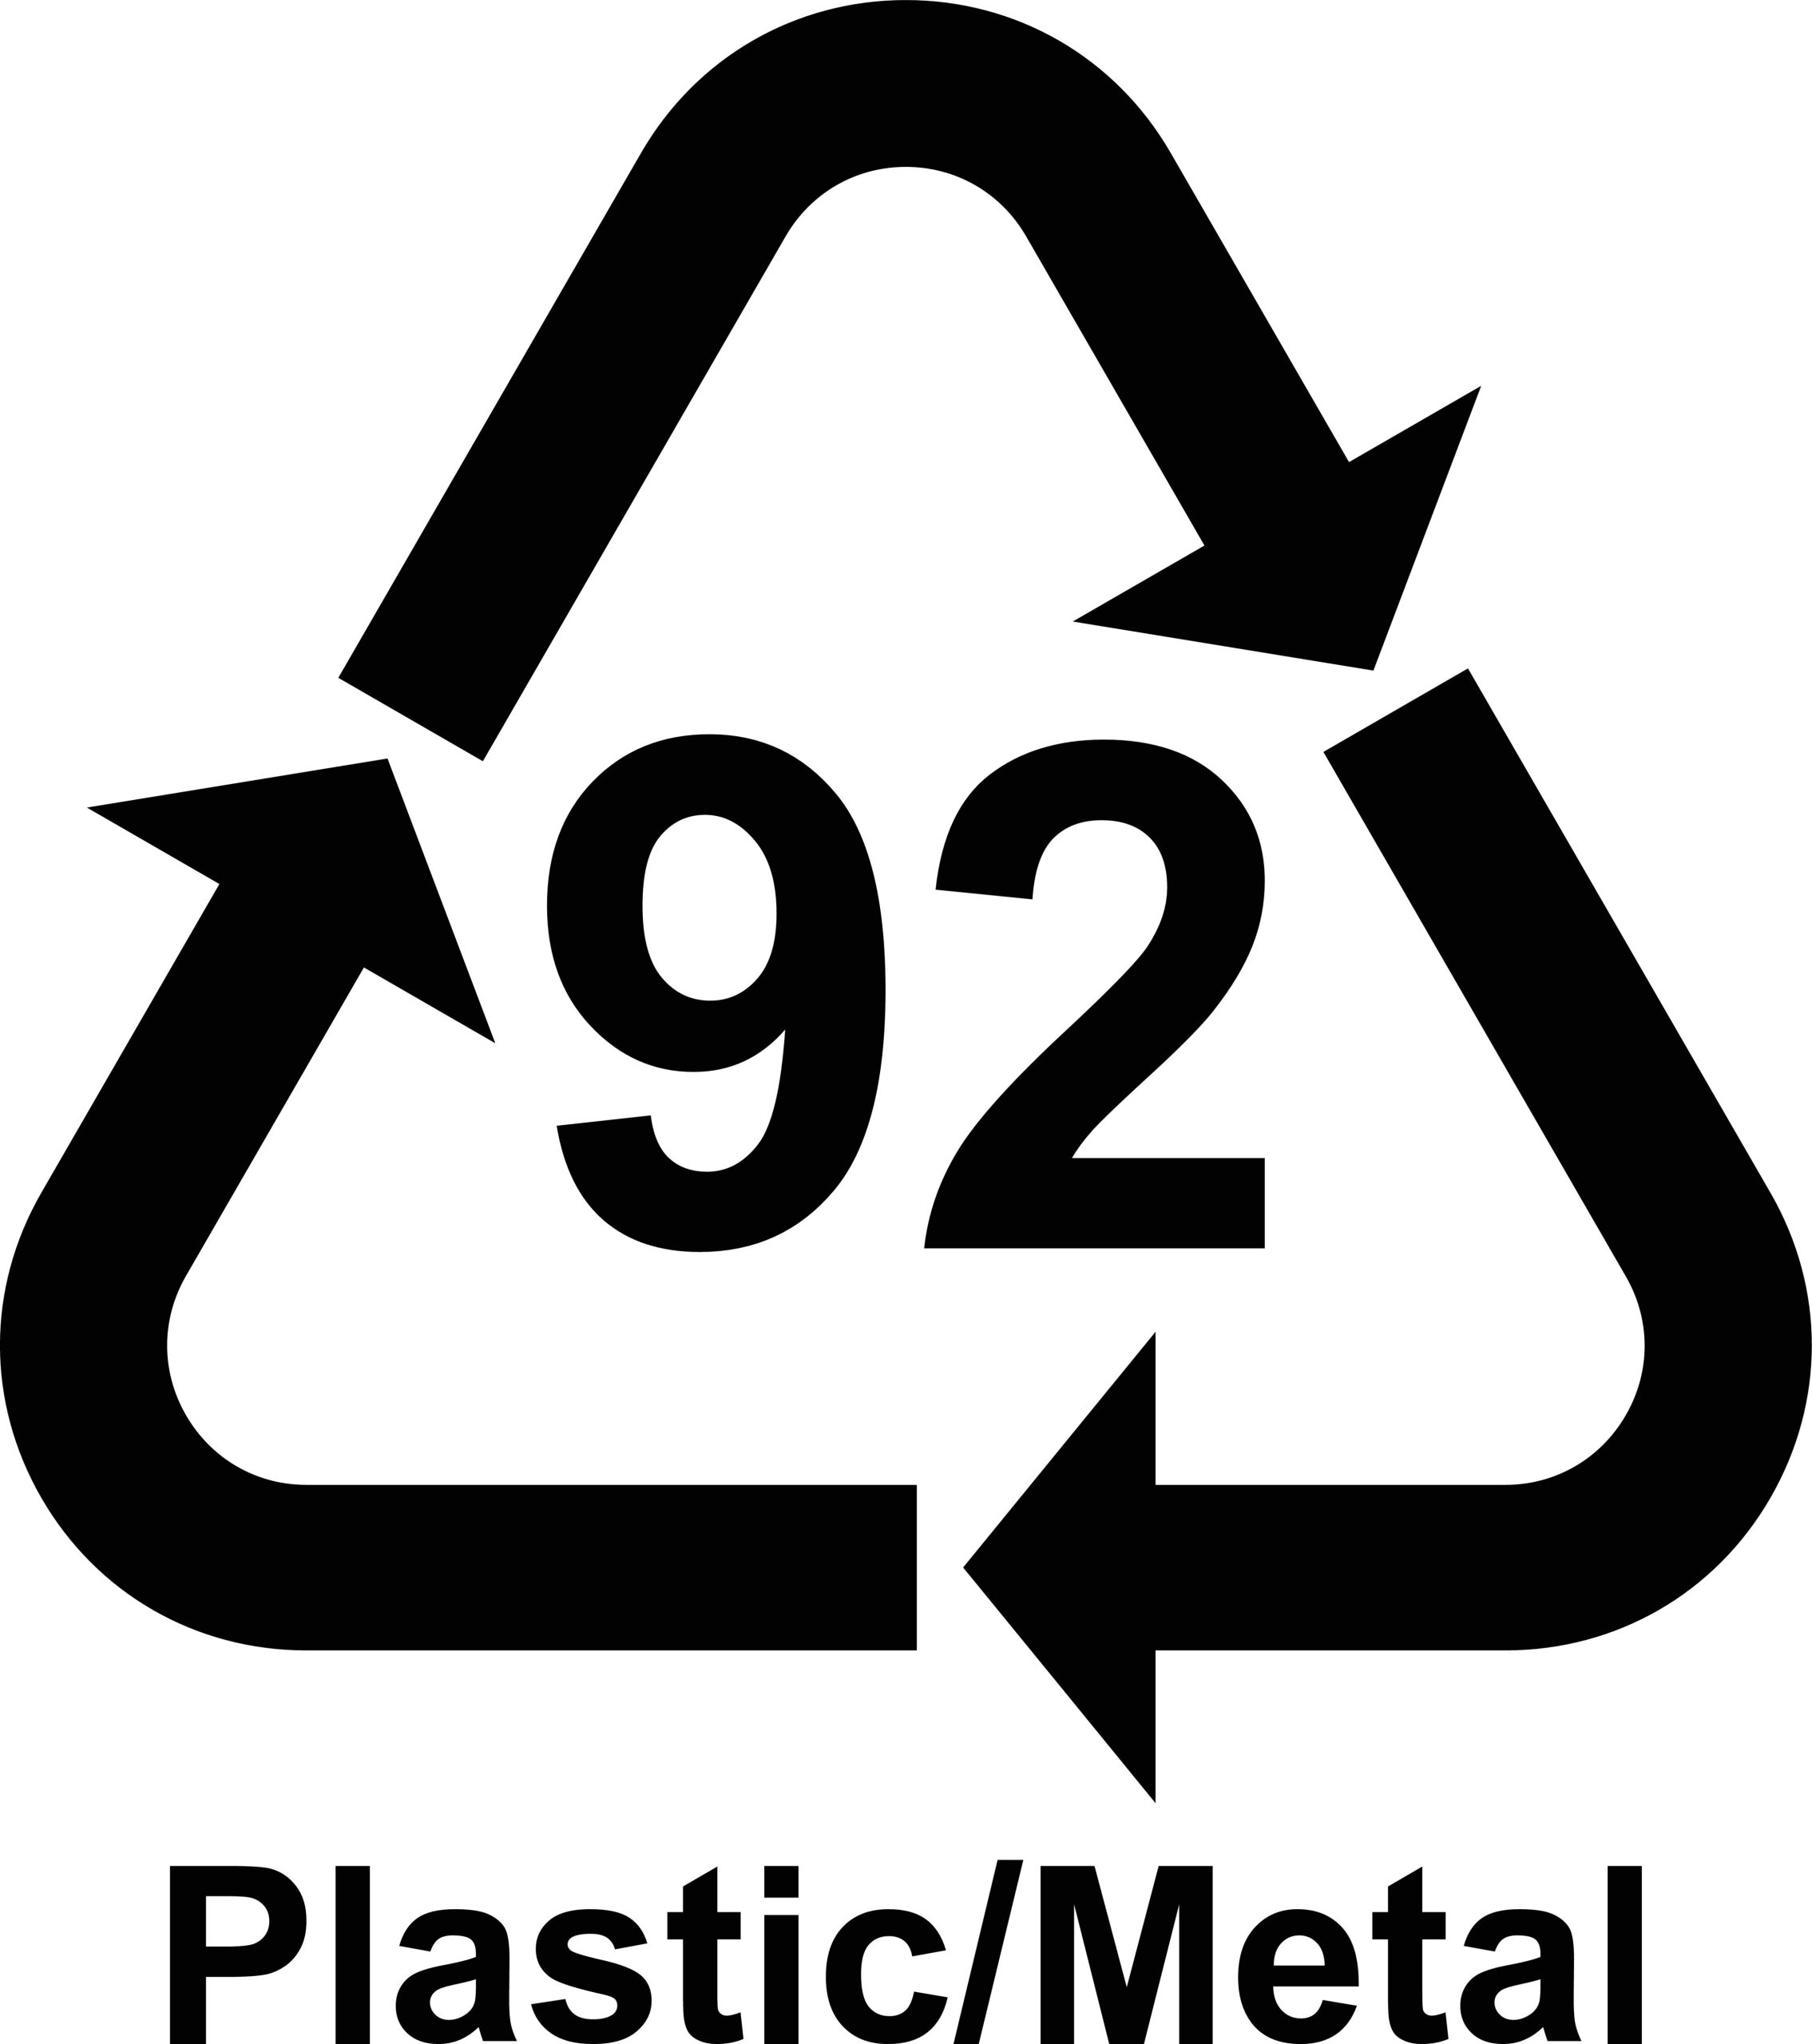 PLASTIC METAL 92